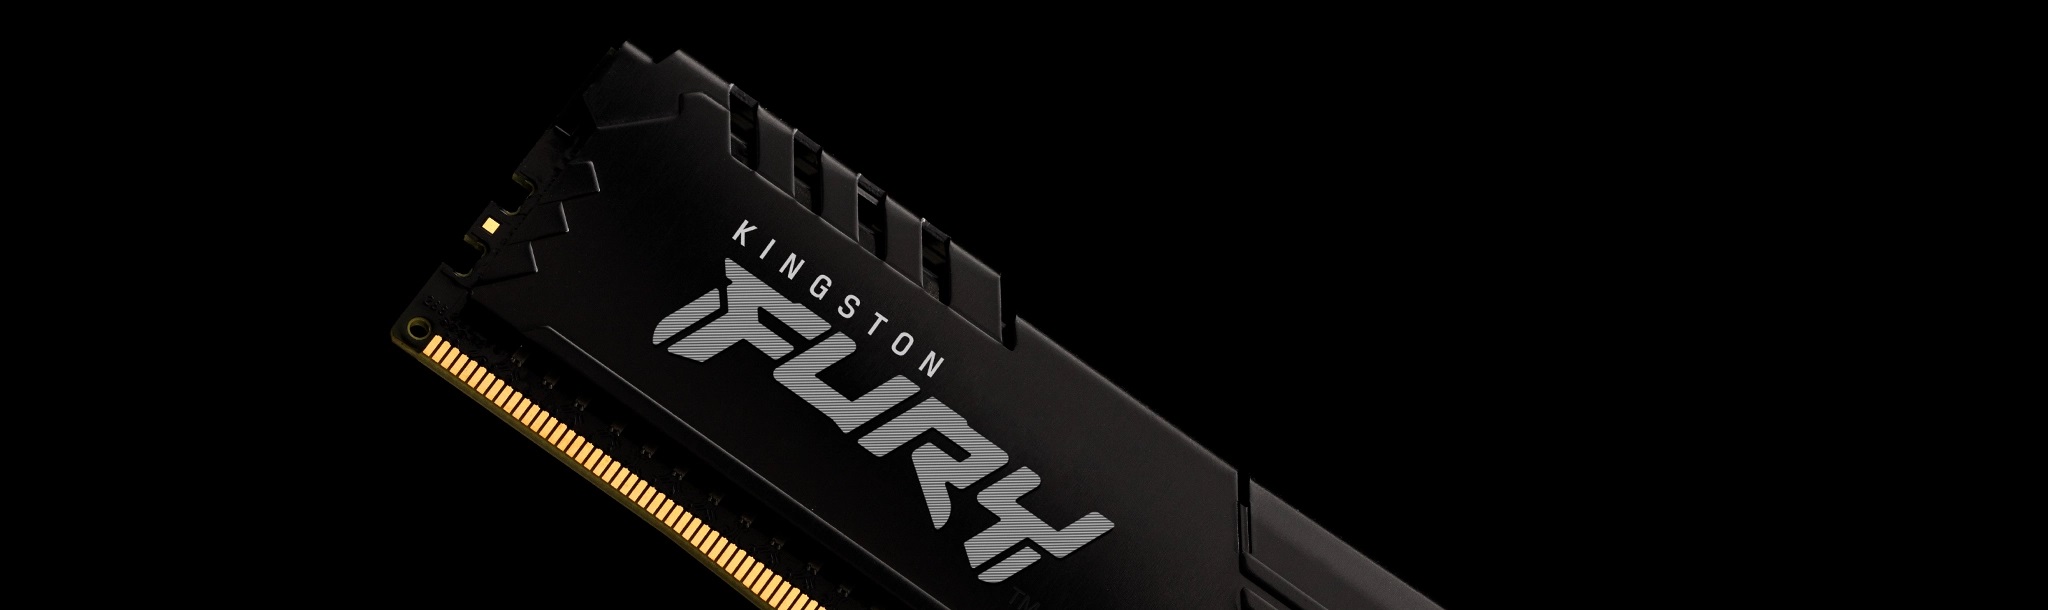 Kingston FURY Beast DDR4 Memory 8GB 2666MHz 16 cycles CL(IDD) Low-profile heat spreader design KF426C16BB/8 